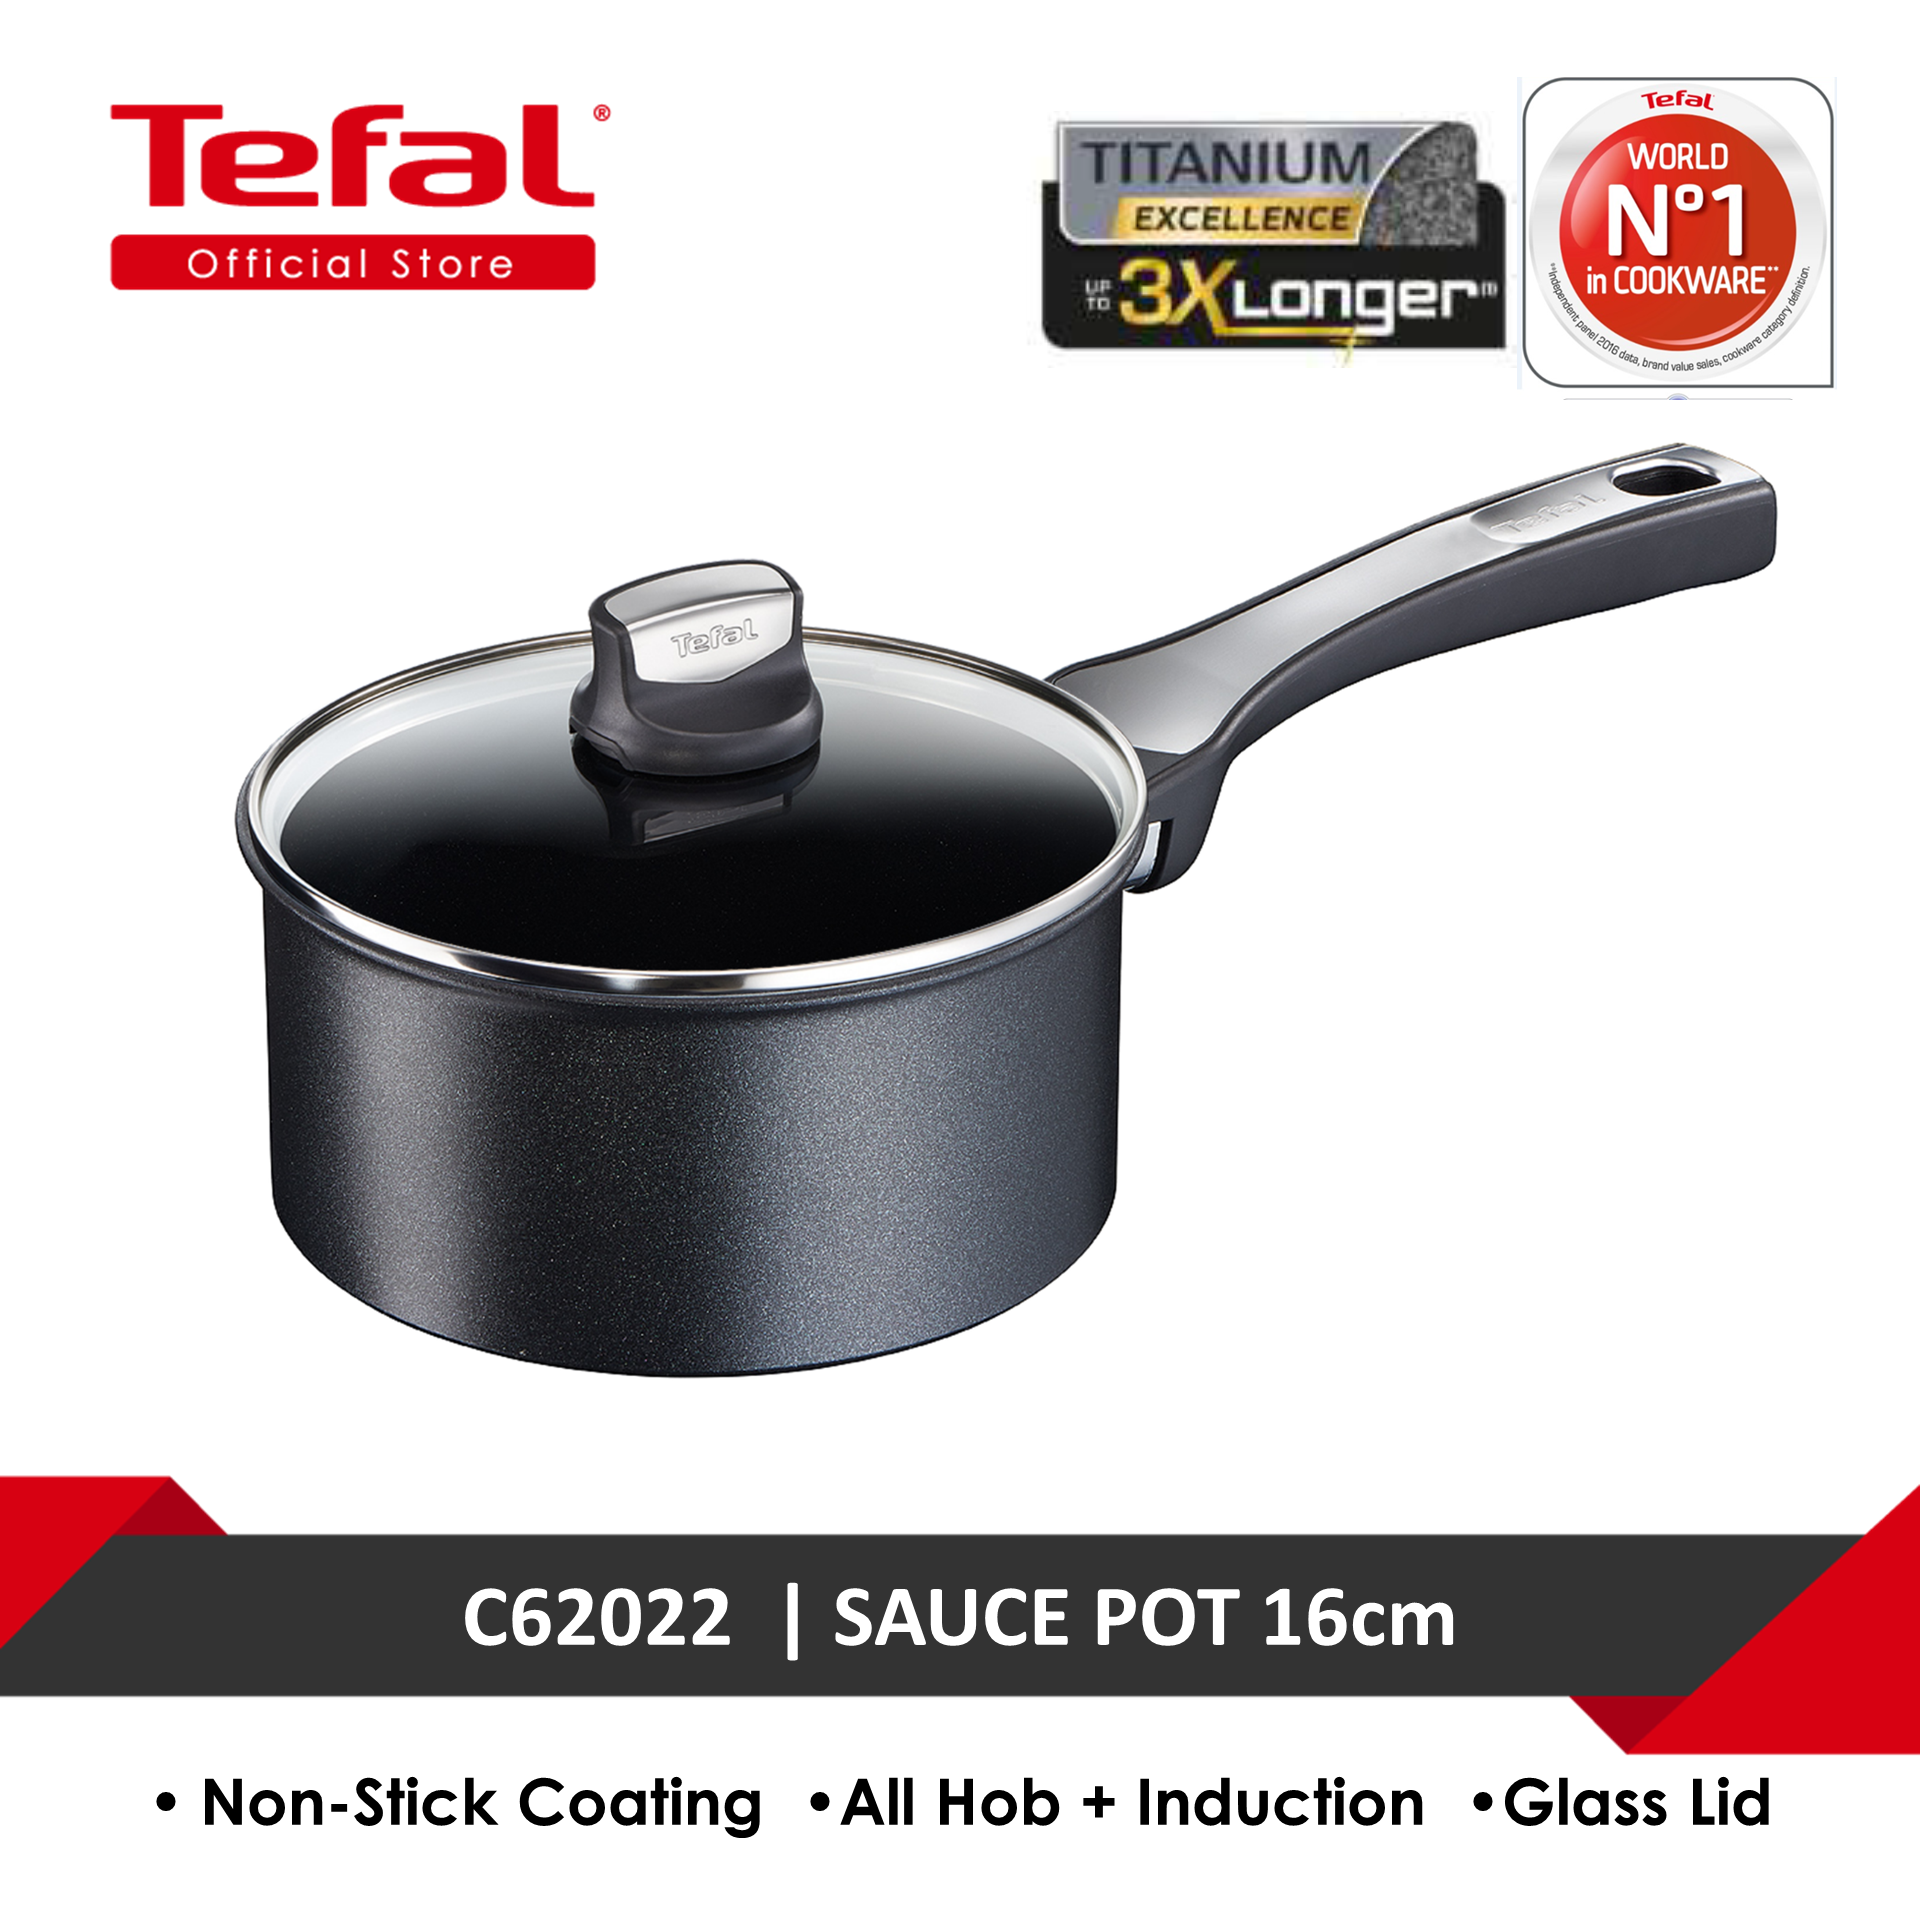 Tefal Expertise Sauce Pan w/ Lid 16cm C62022 | Lazada Singapore